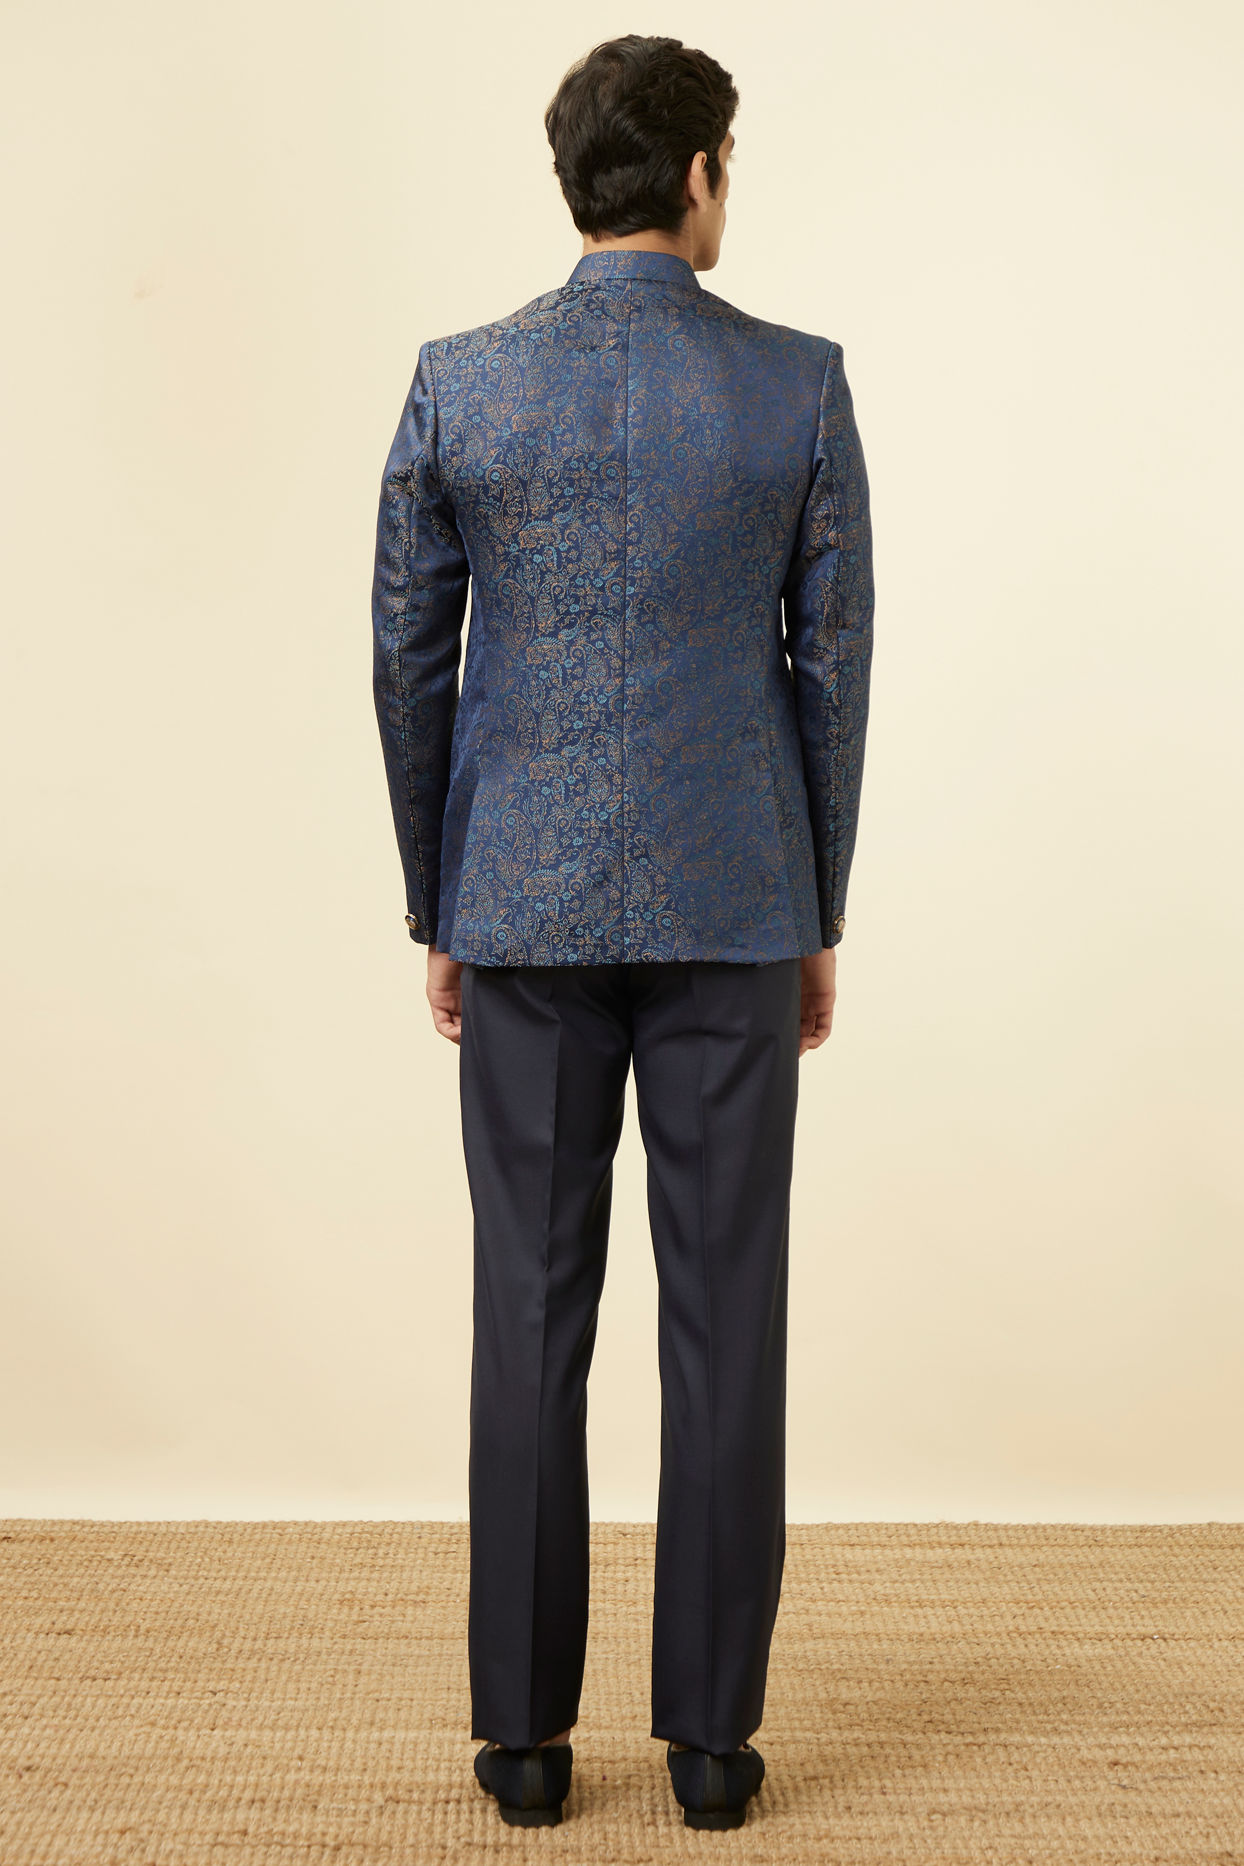 Buy Blue Paisley Textured Jodhpuri Suit Online in India @Manyavar ...